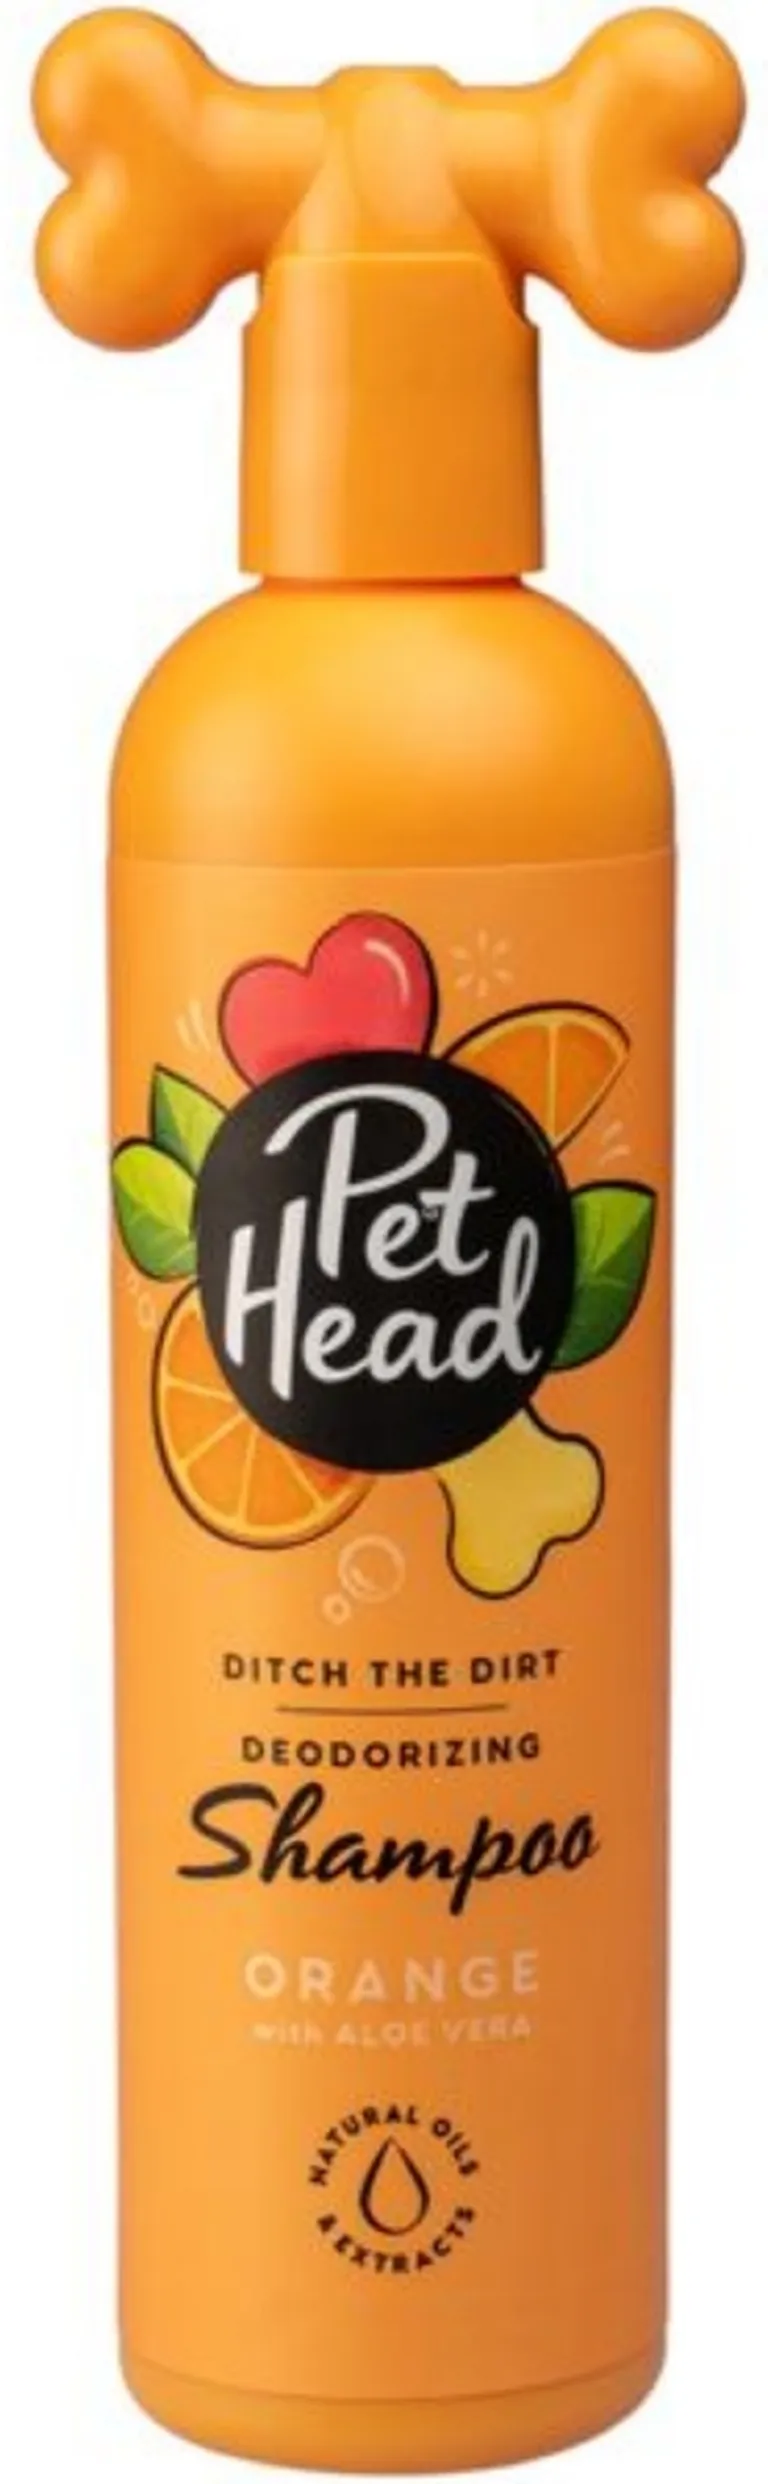 Pet Head Ditch the Dirt Deodorizing Shampoo for Dogs Orange with Aloe Vera Photo 1